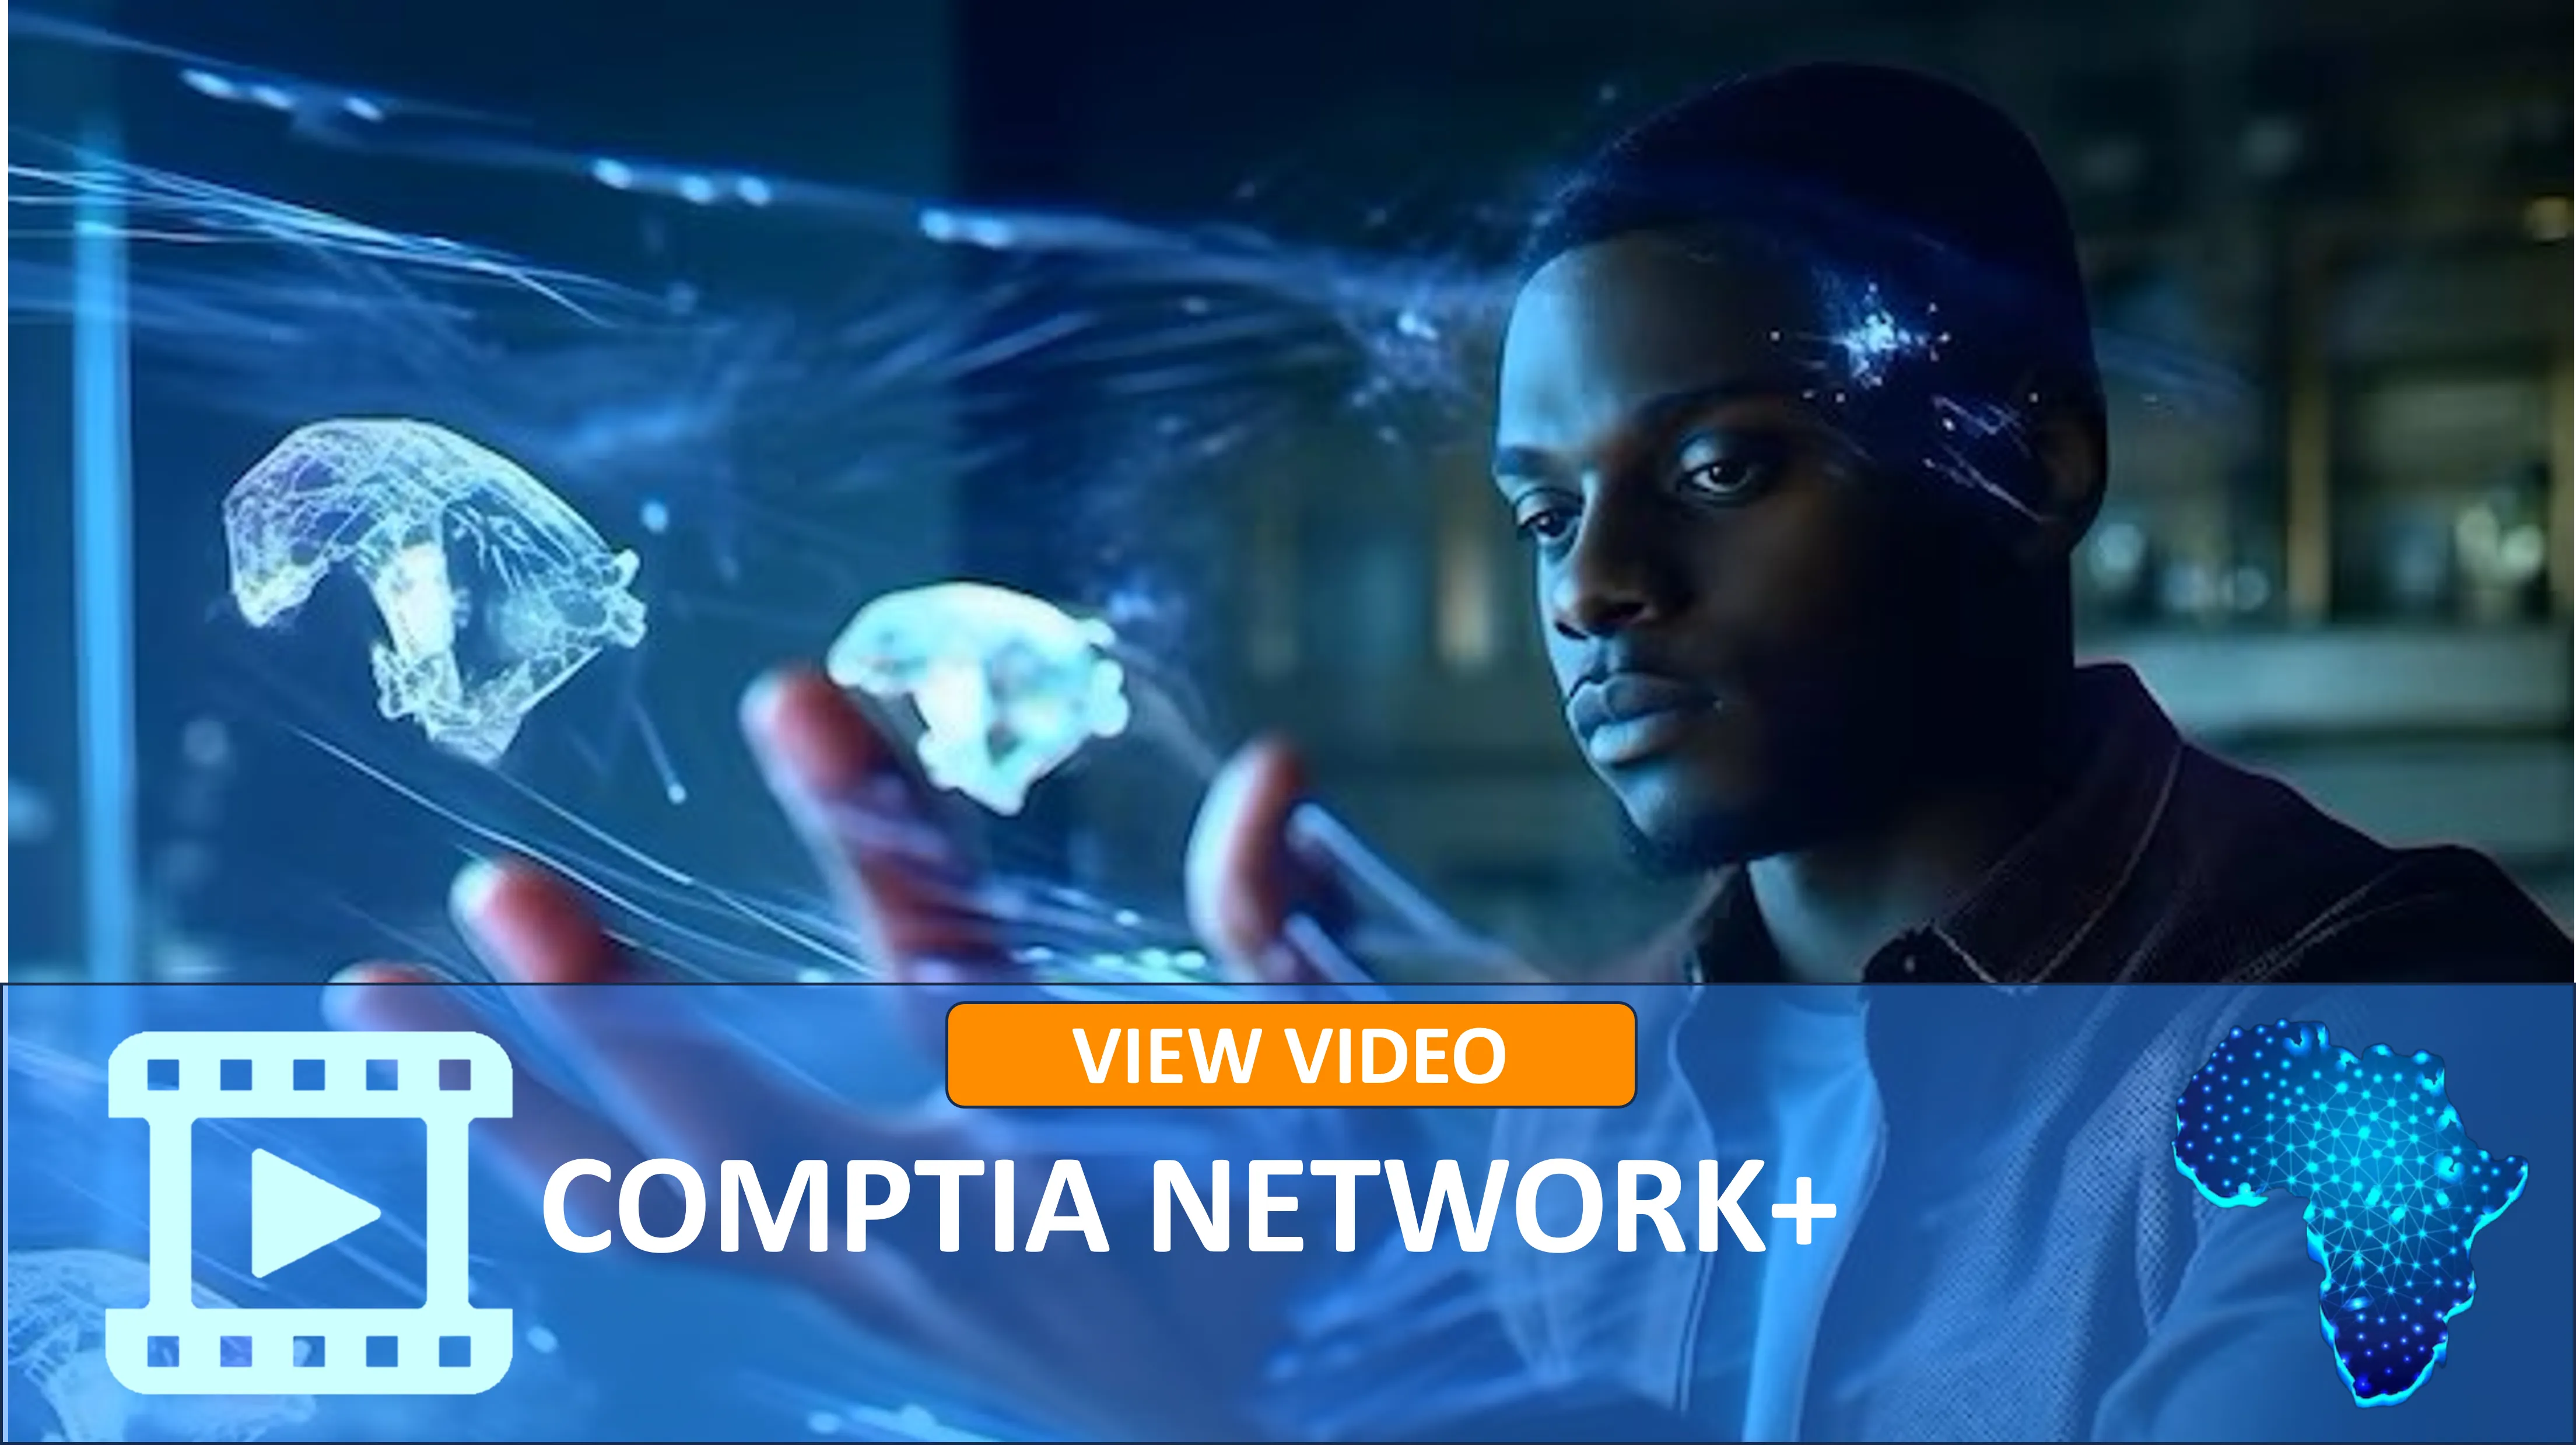 CompTIA NETWORK+